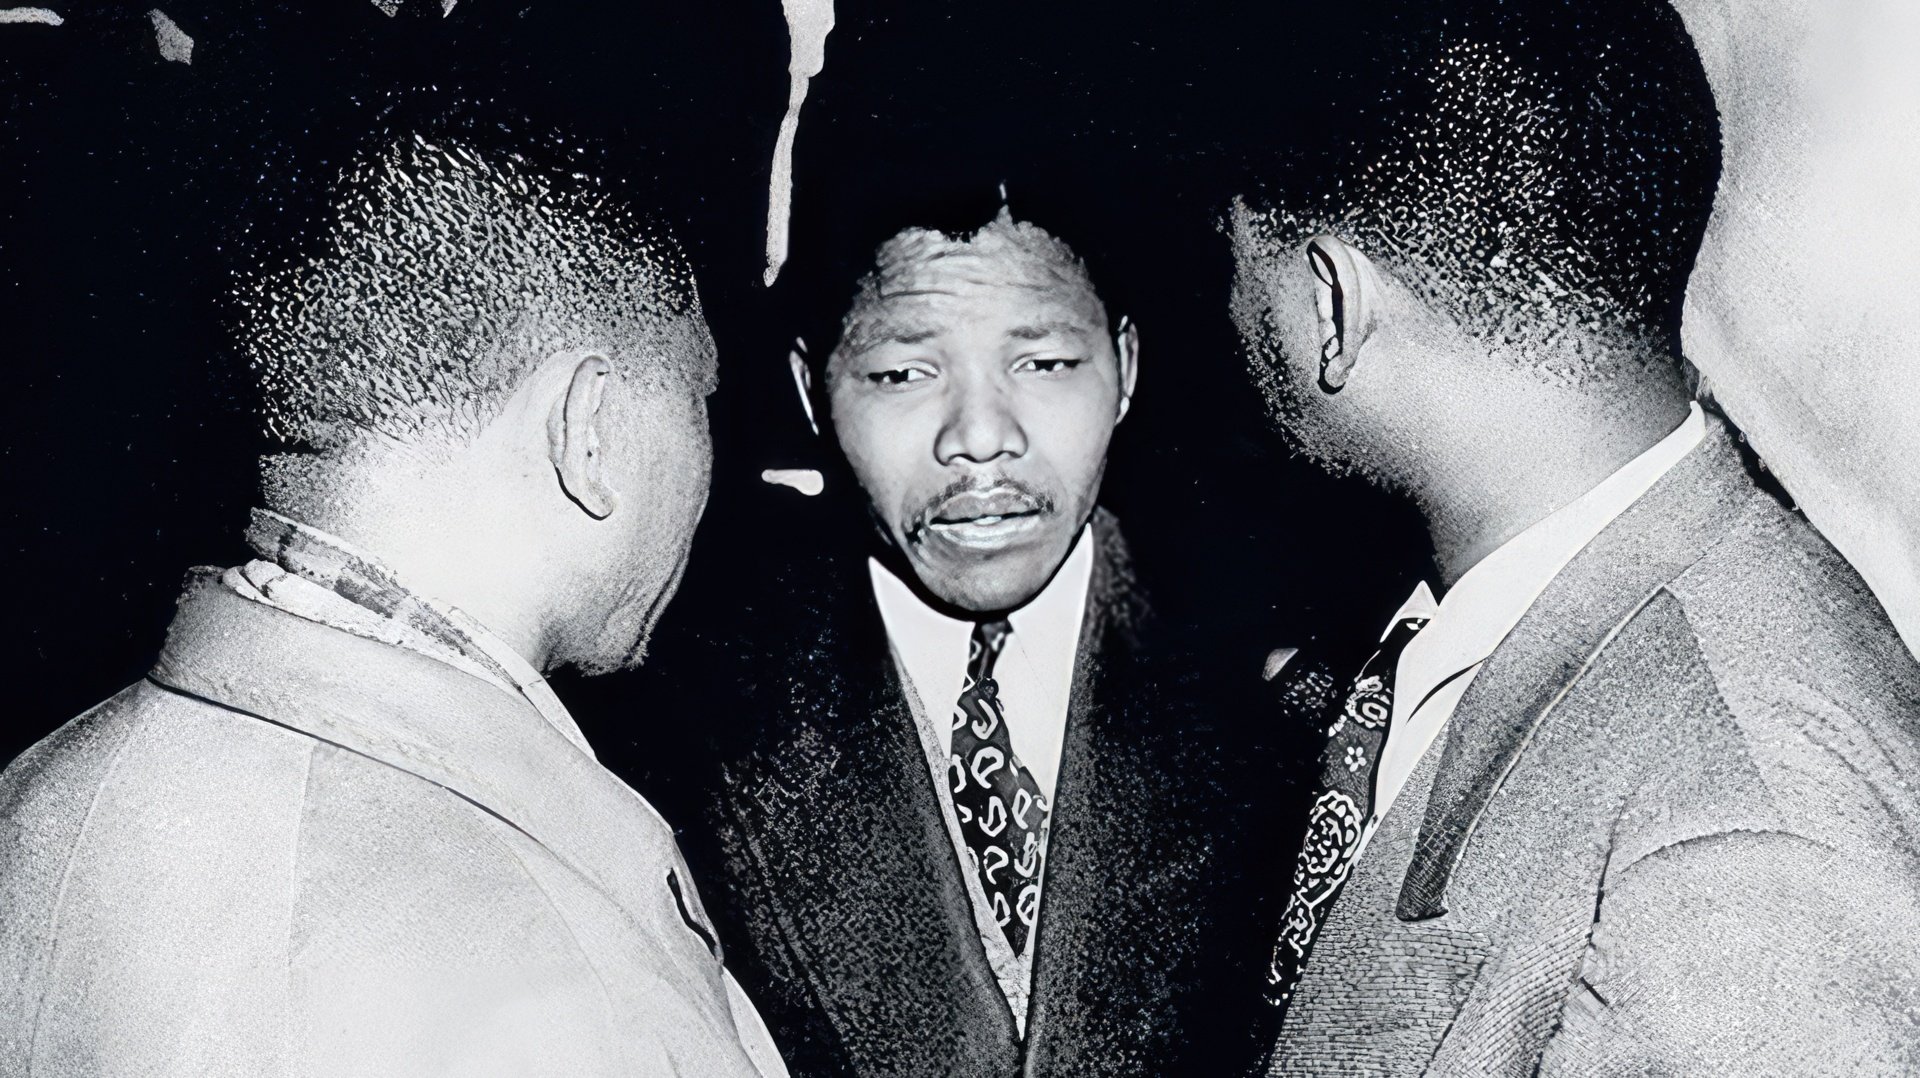 Nelson Mandela with his associates